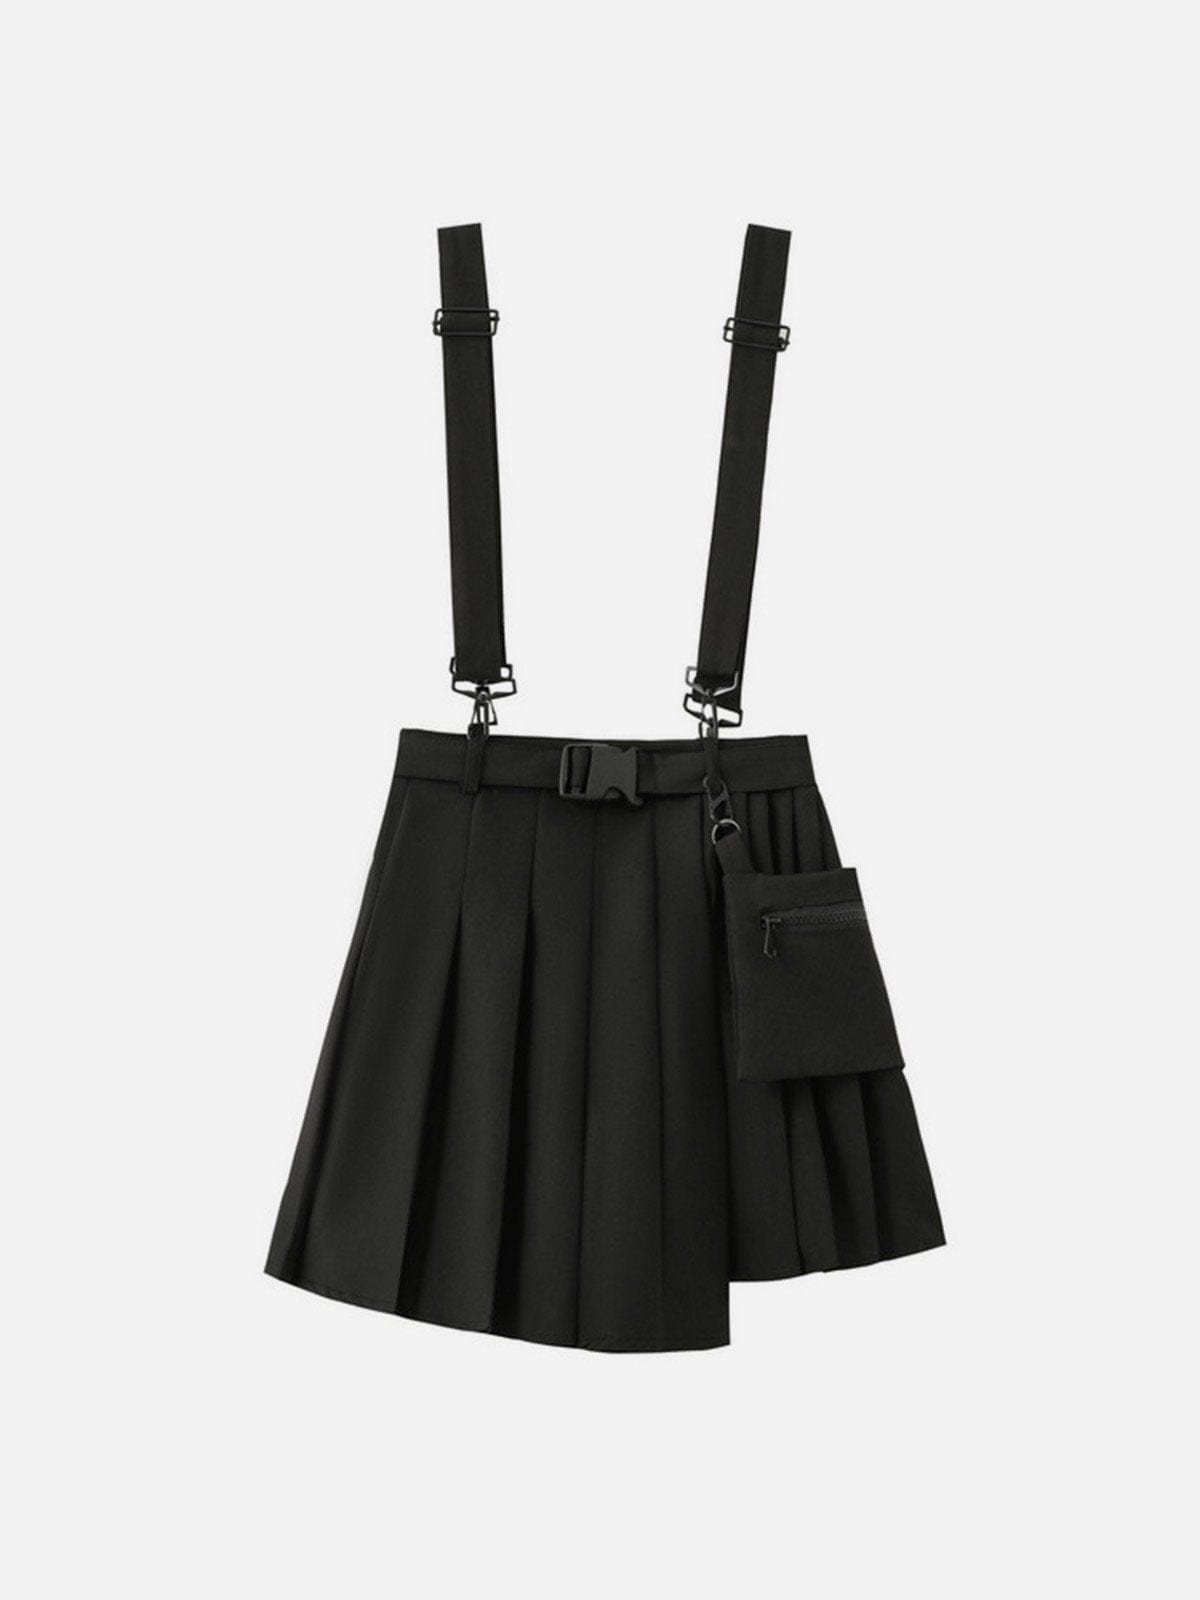 NEV Button Pleated Suspender Skirt